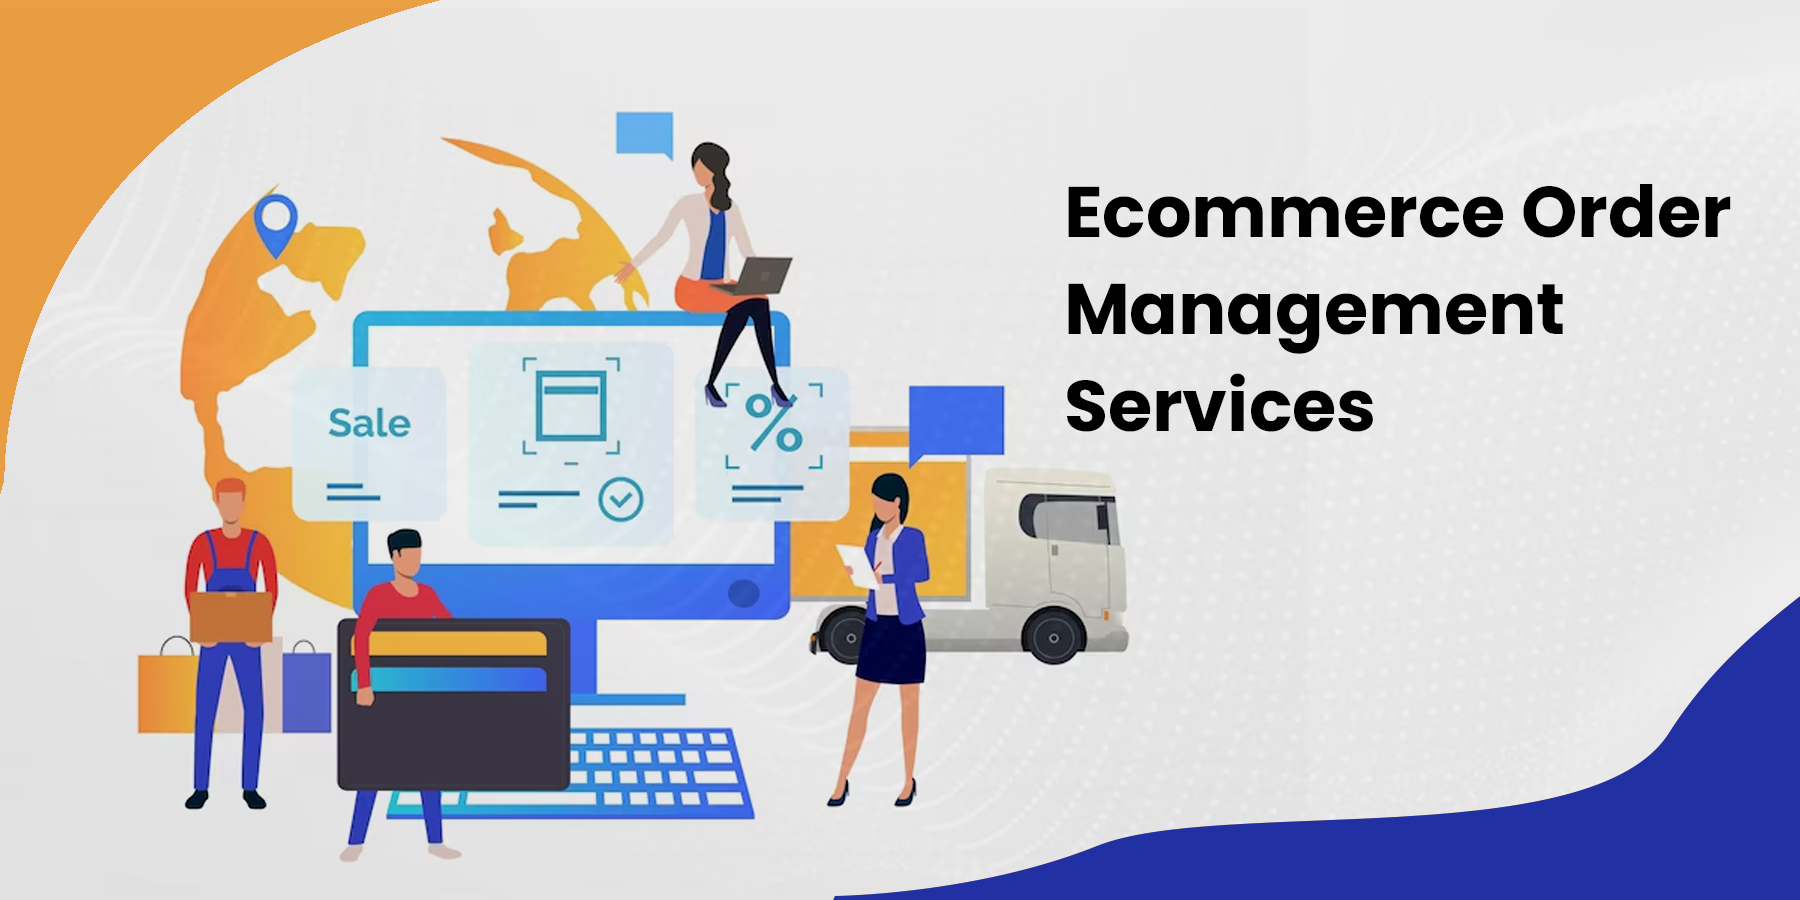 Ecommerce Order Management Services